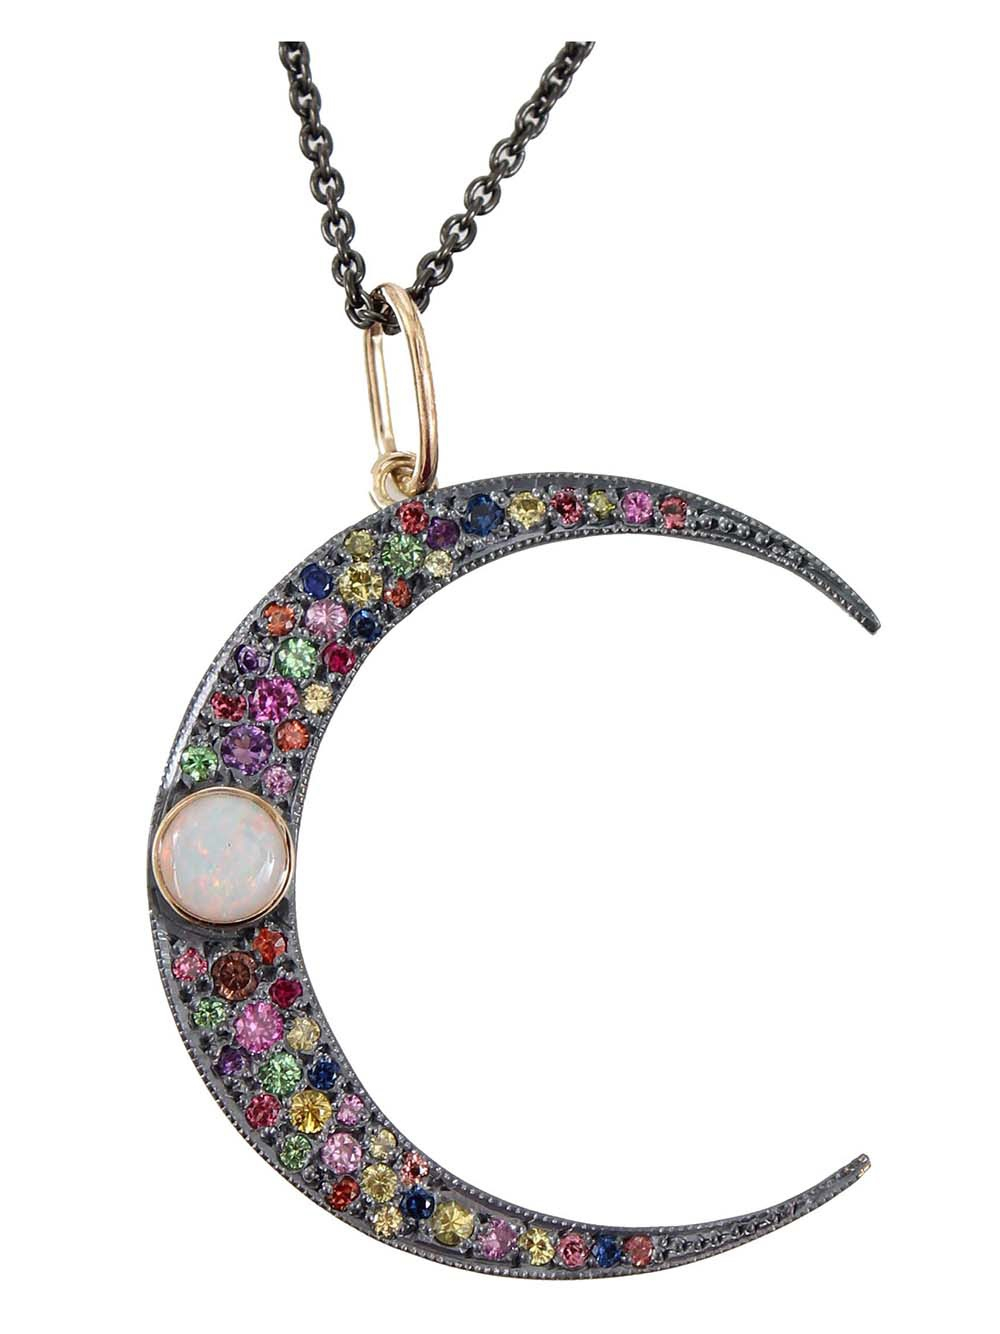 Lyst - Andrea Fohrman Crescent Moon Pendant Necklace in Black